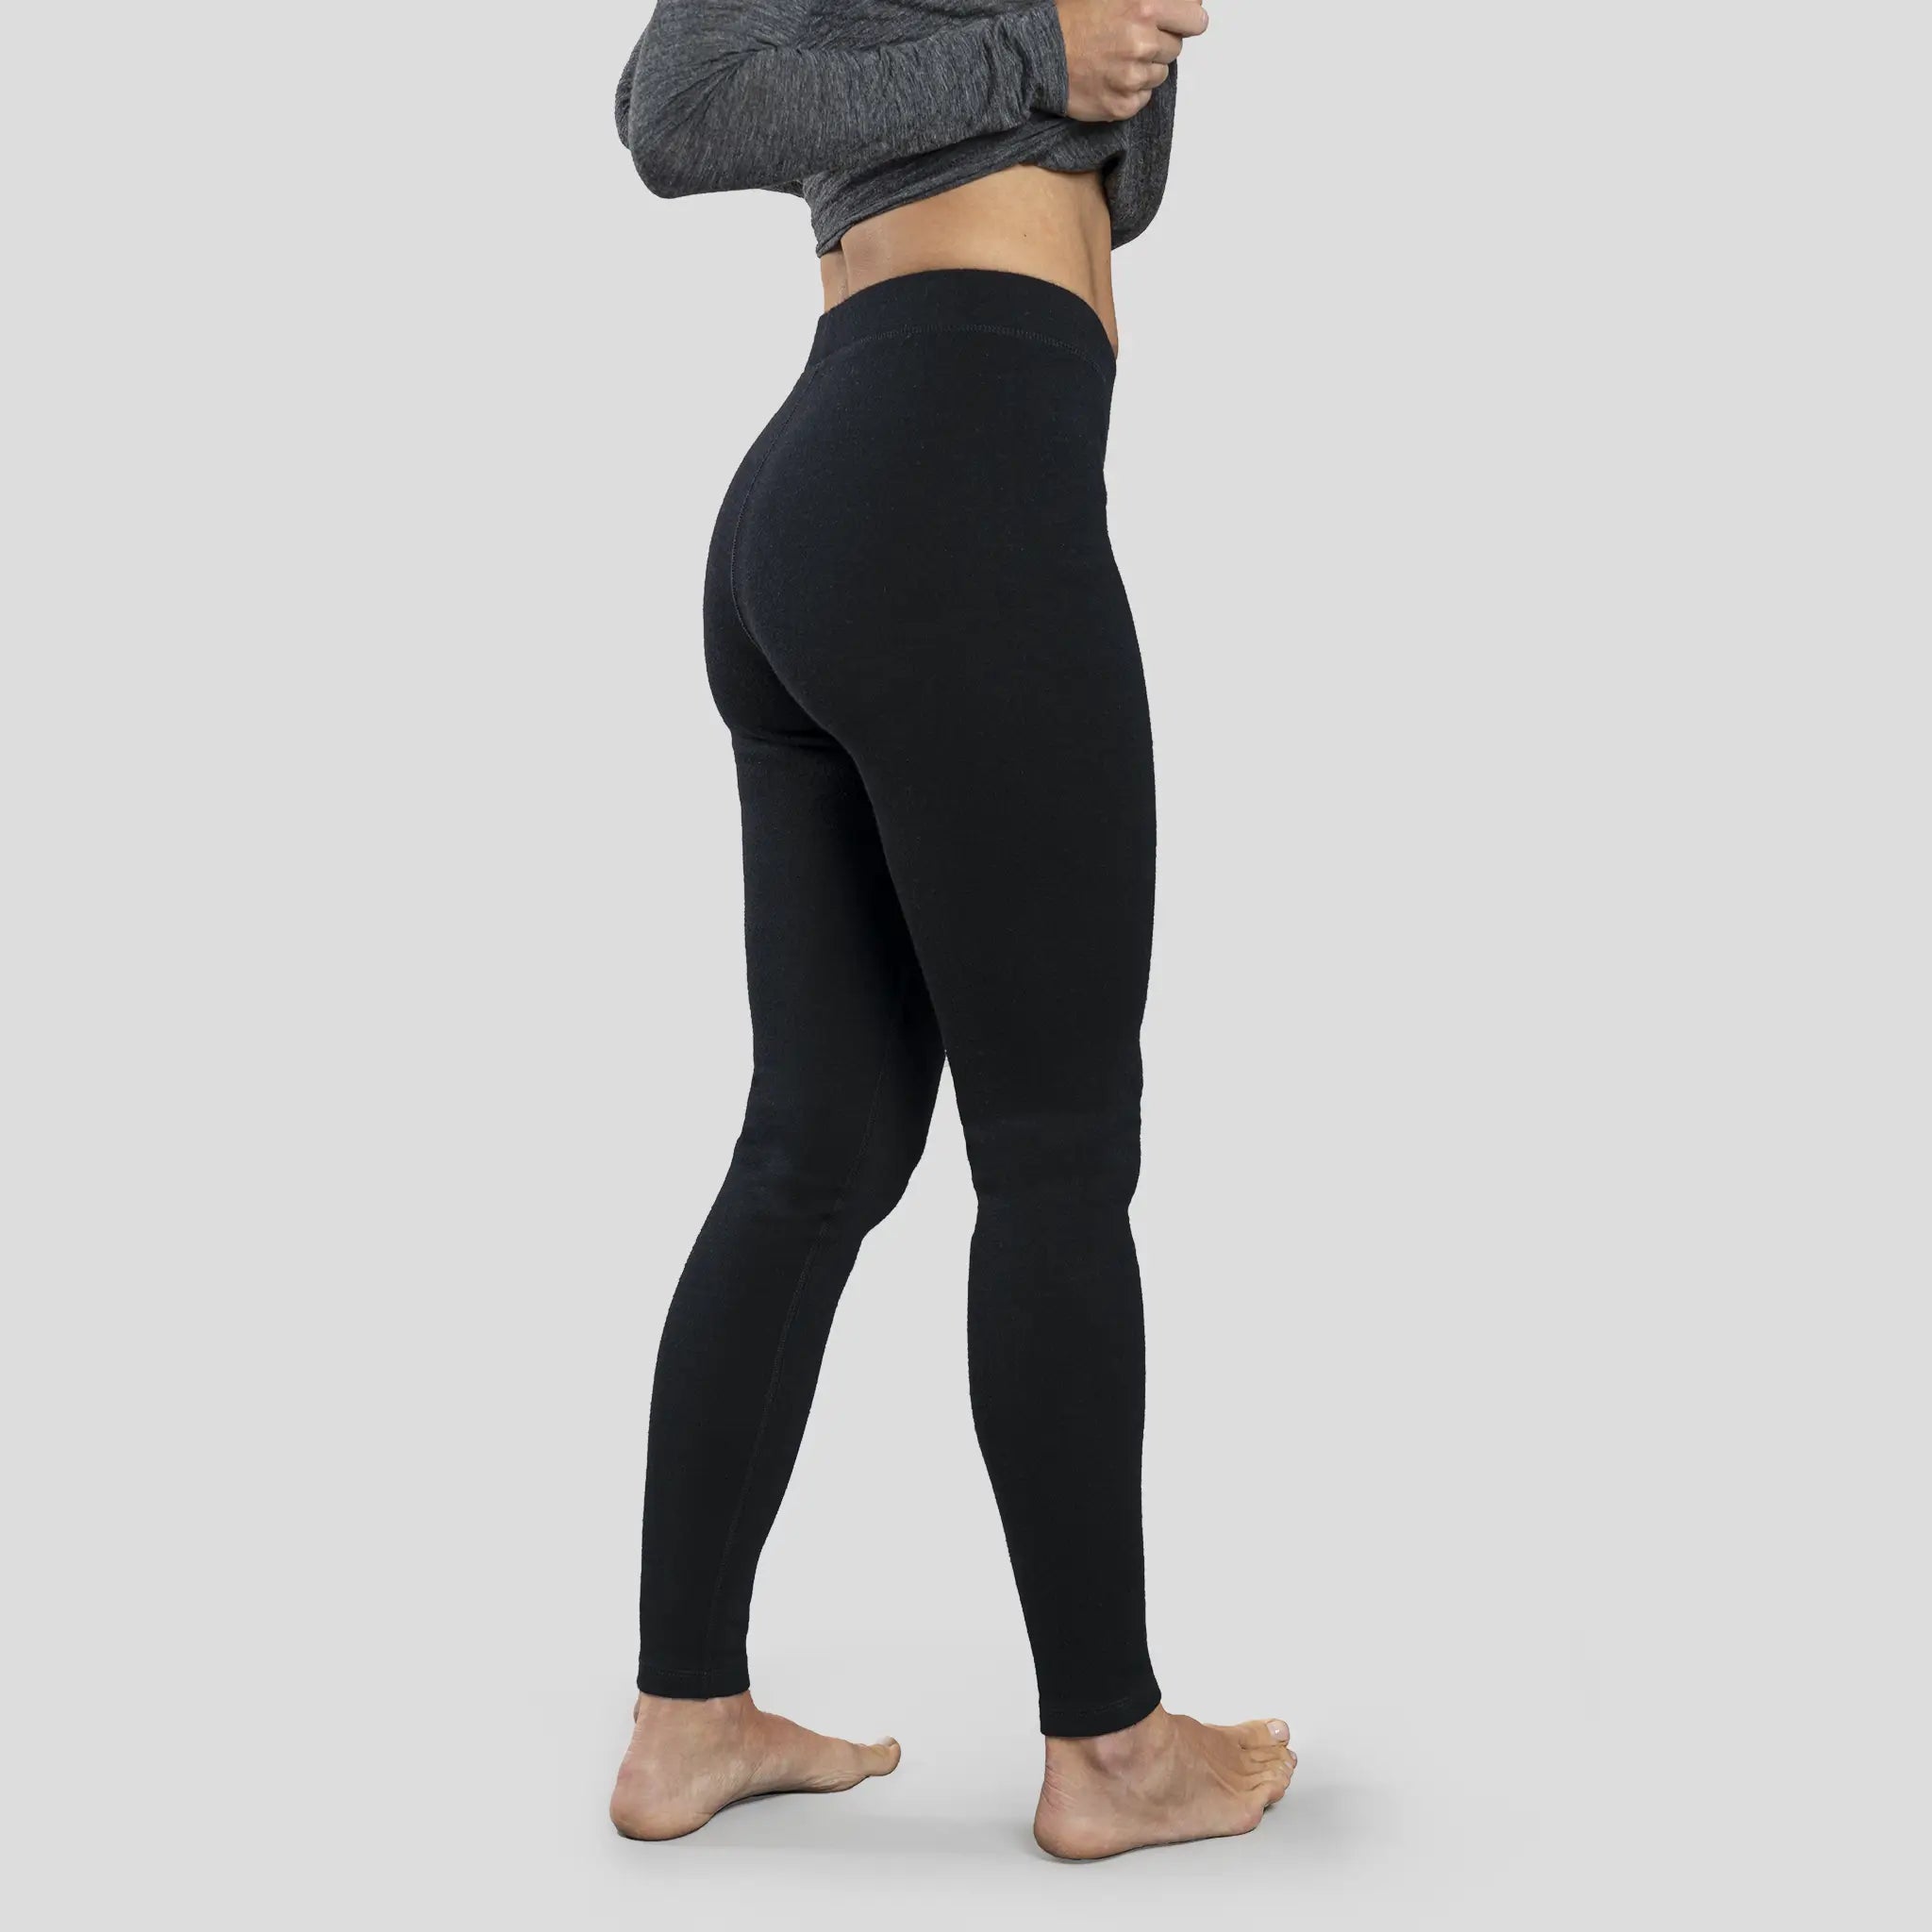 Women's Alpaca Wool Leggings: 300 Lightweight color black